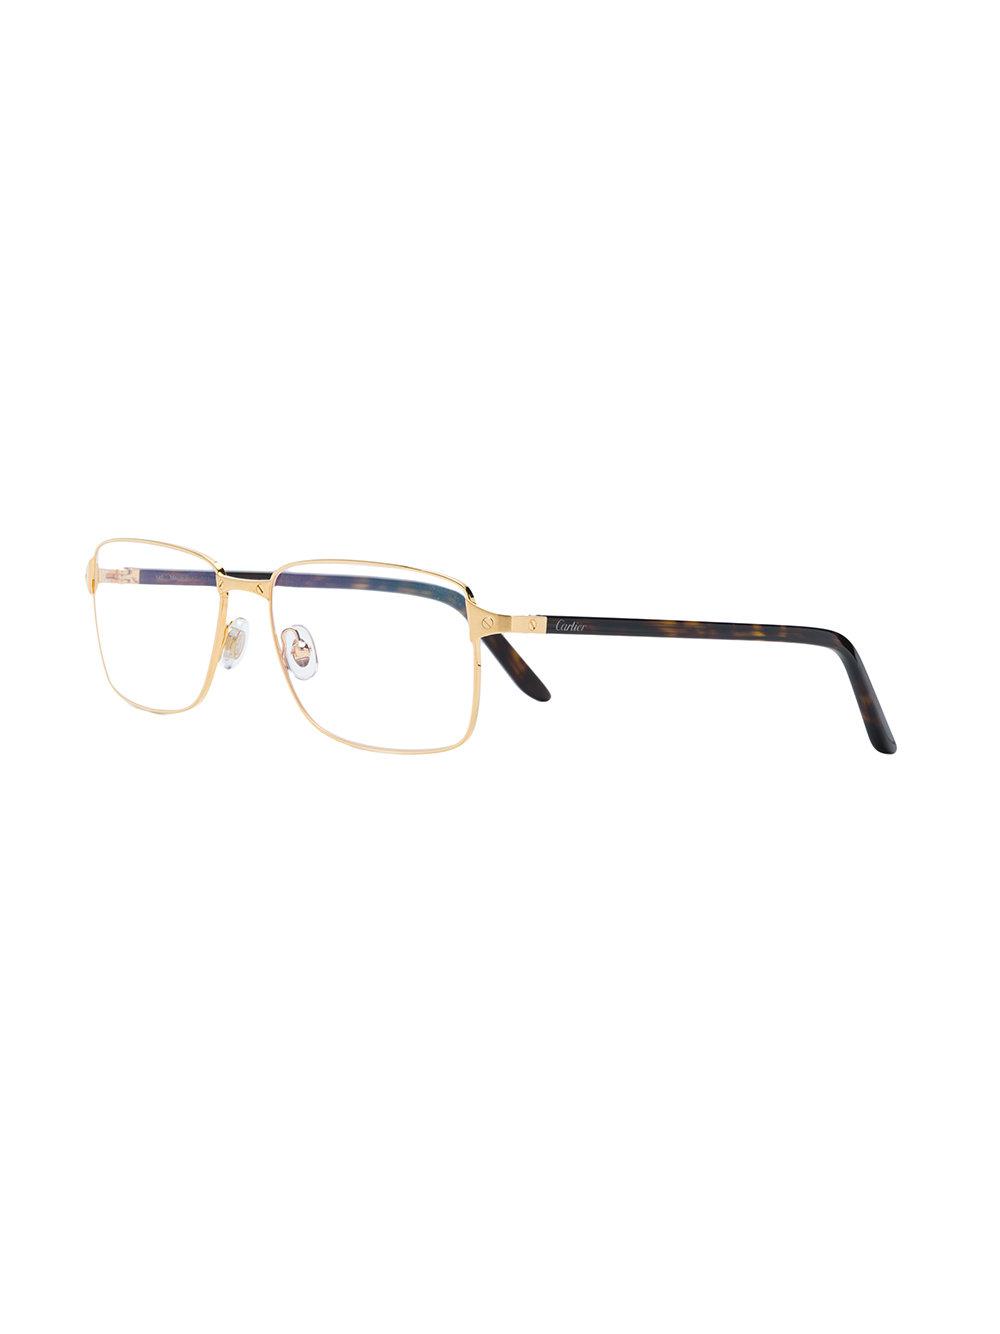 Cartier Santos De Eyeglasses In Brown For Men Lyst 